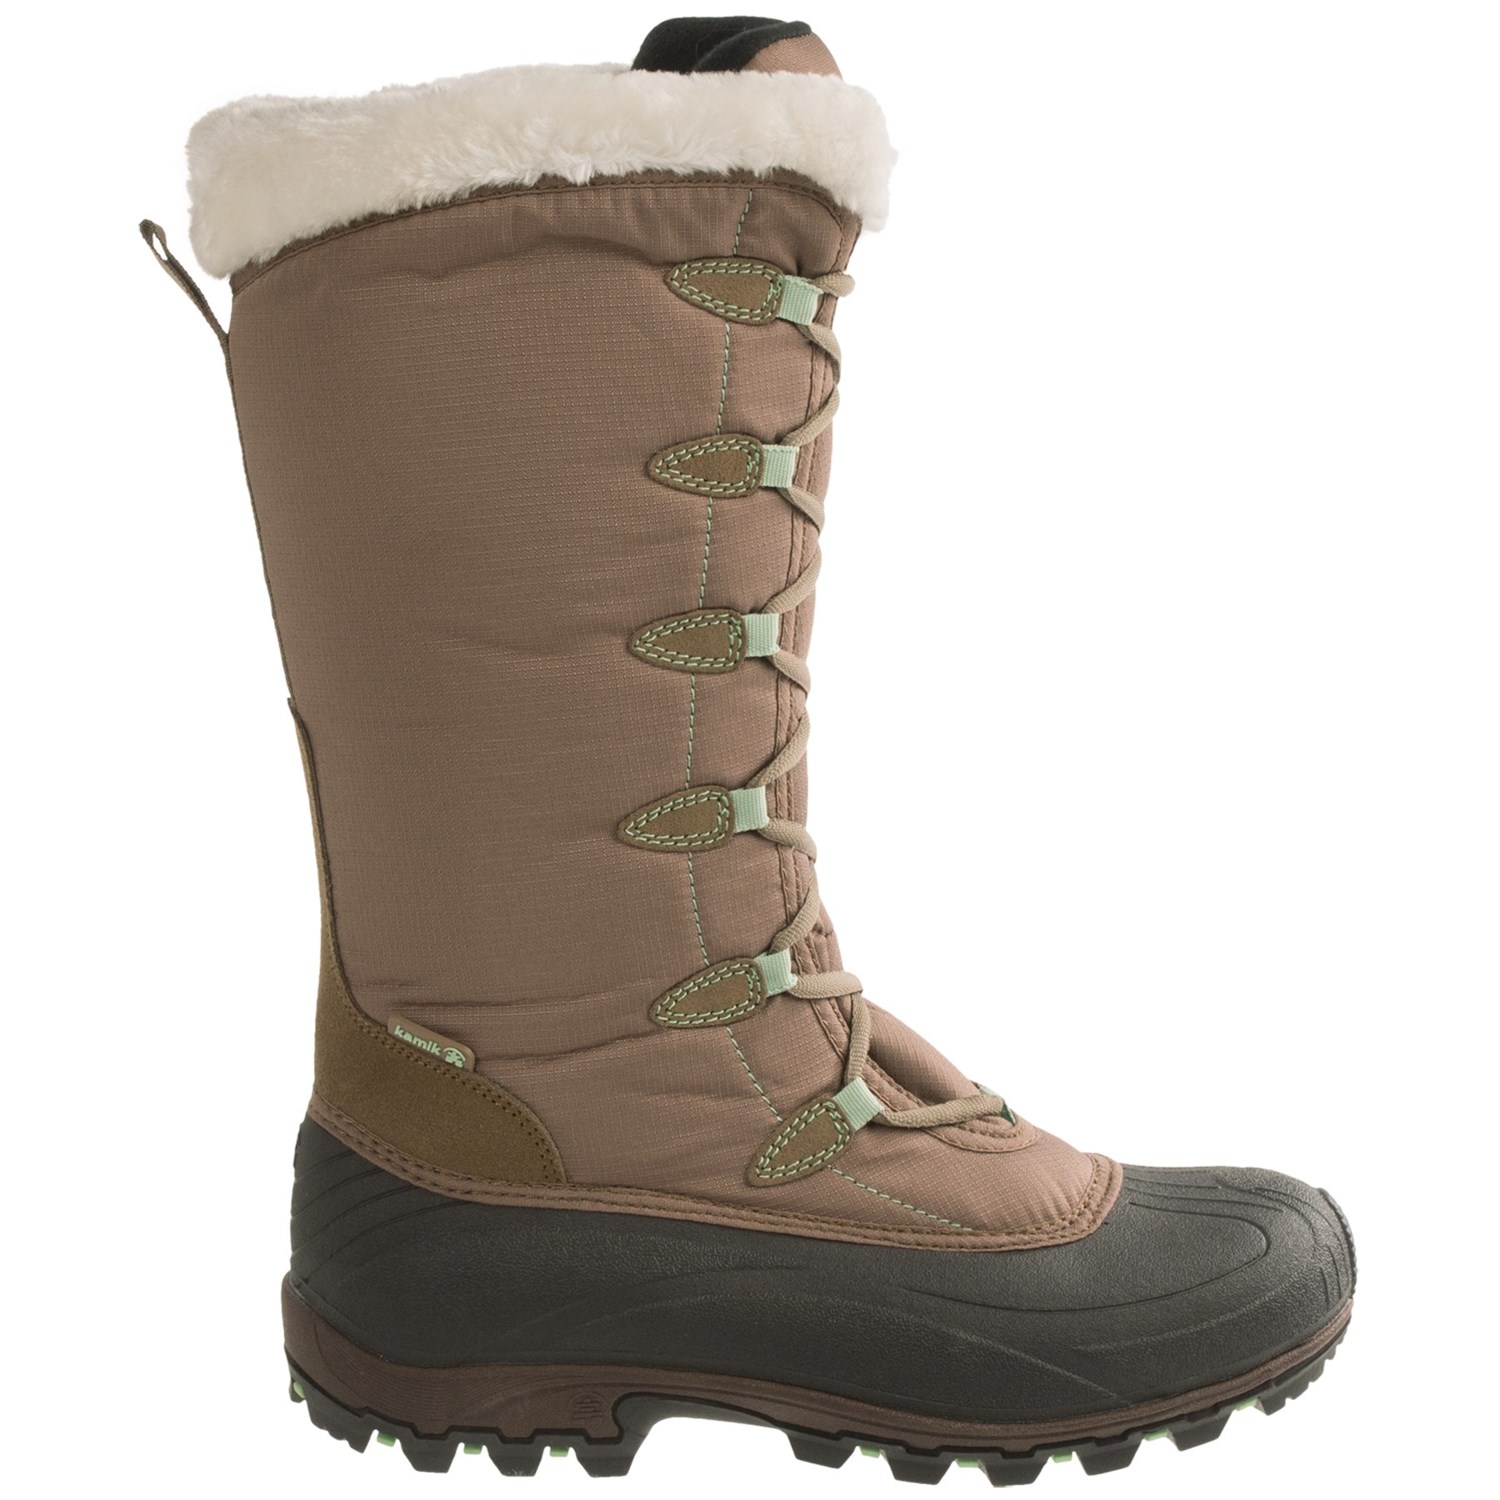 Kamik Encore Snow Boots (For Women) - Save 58%